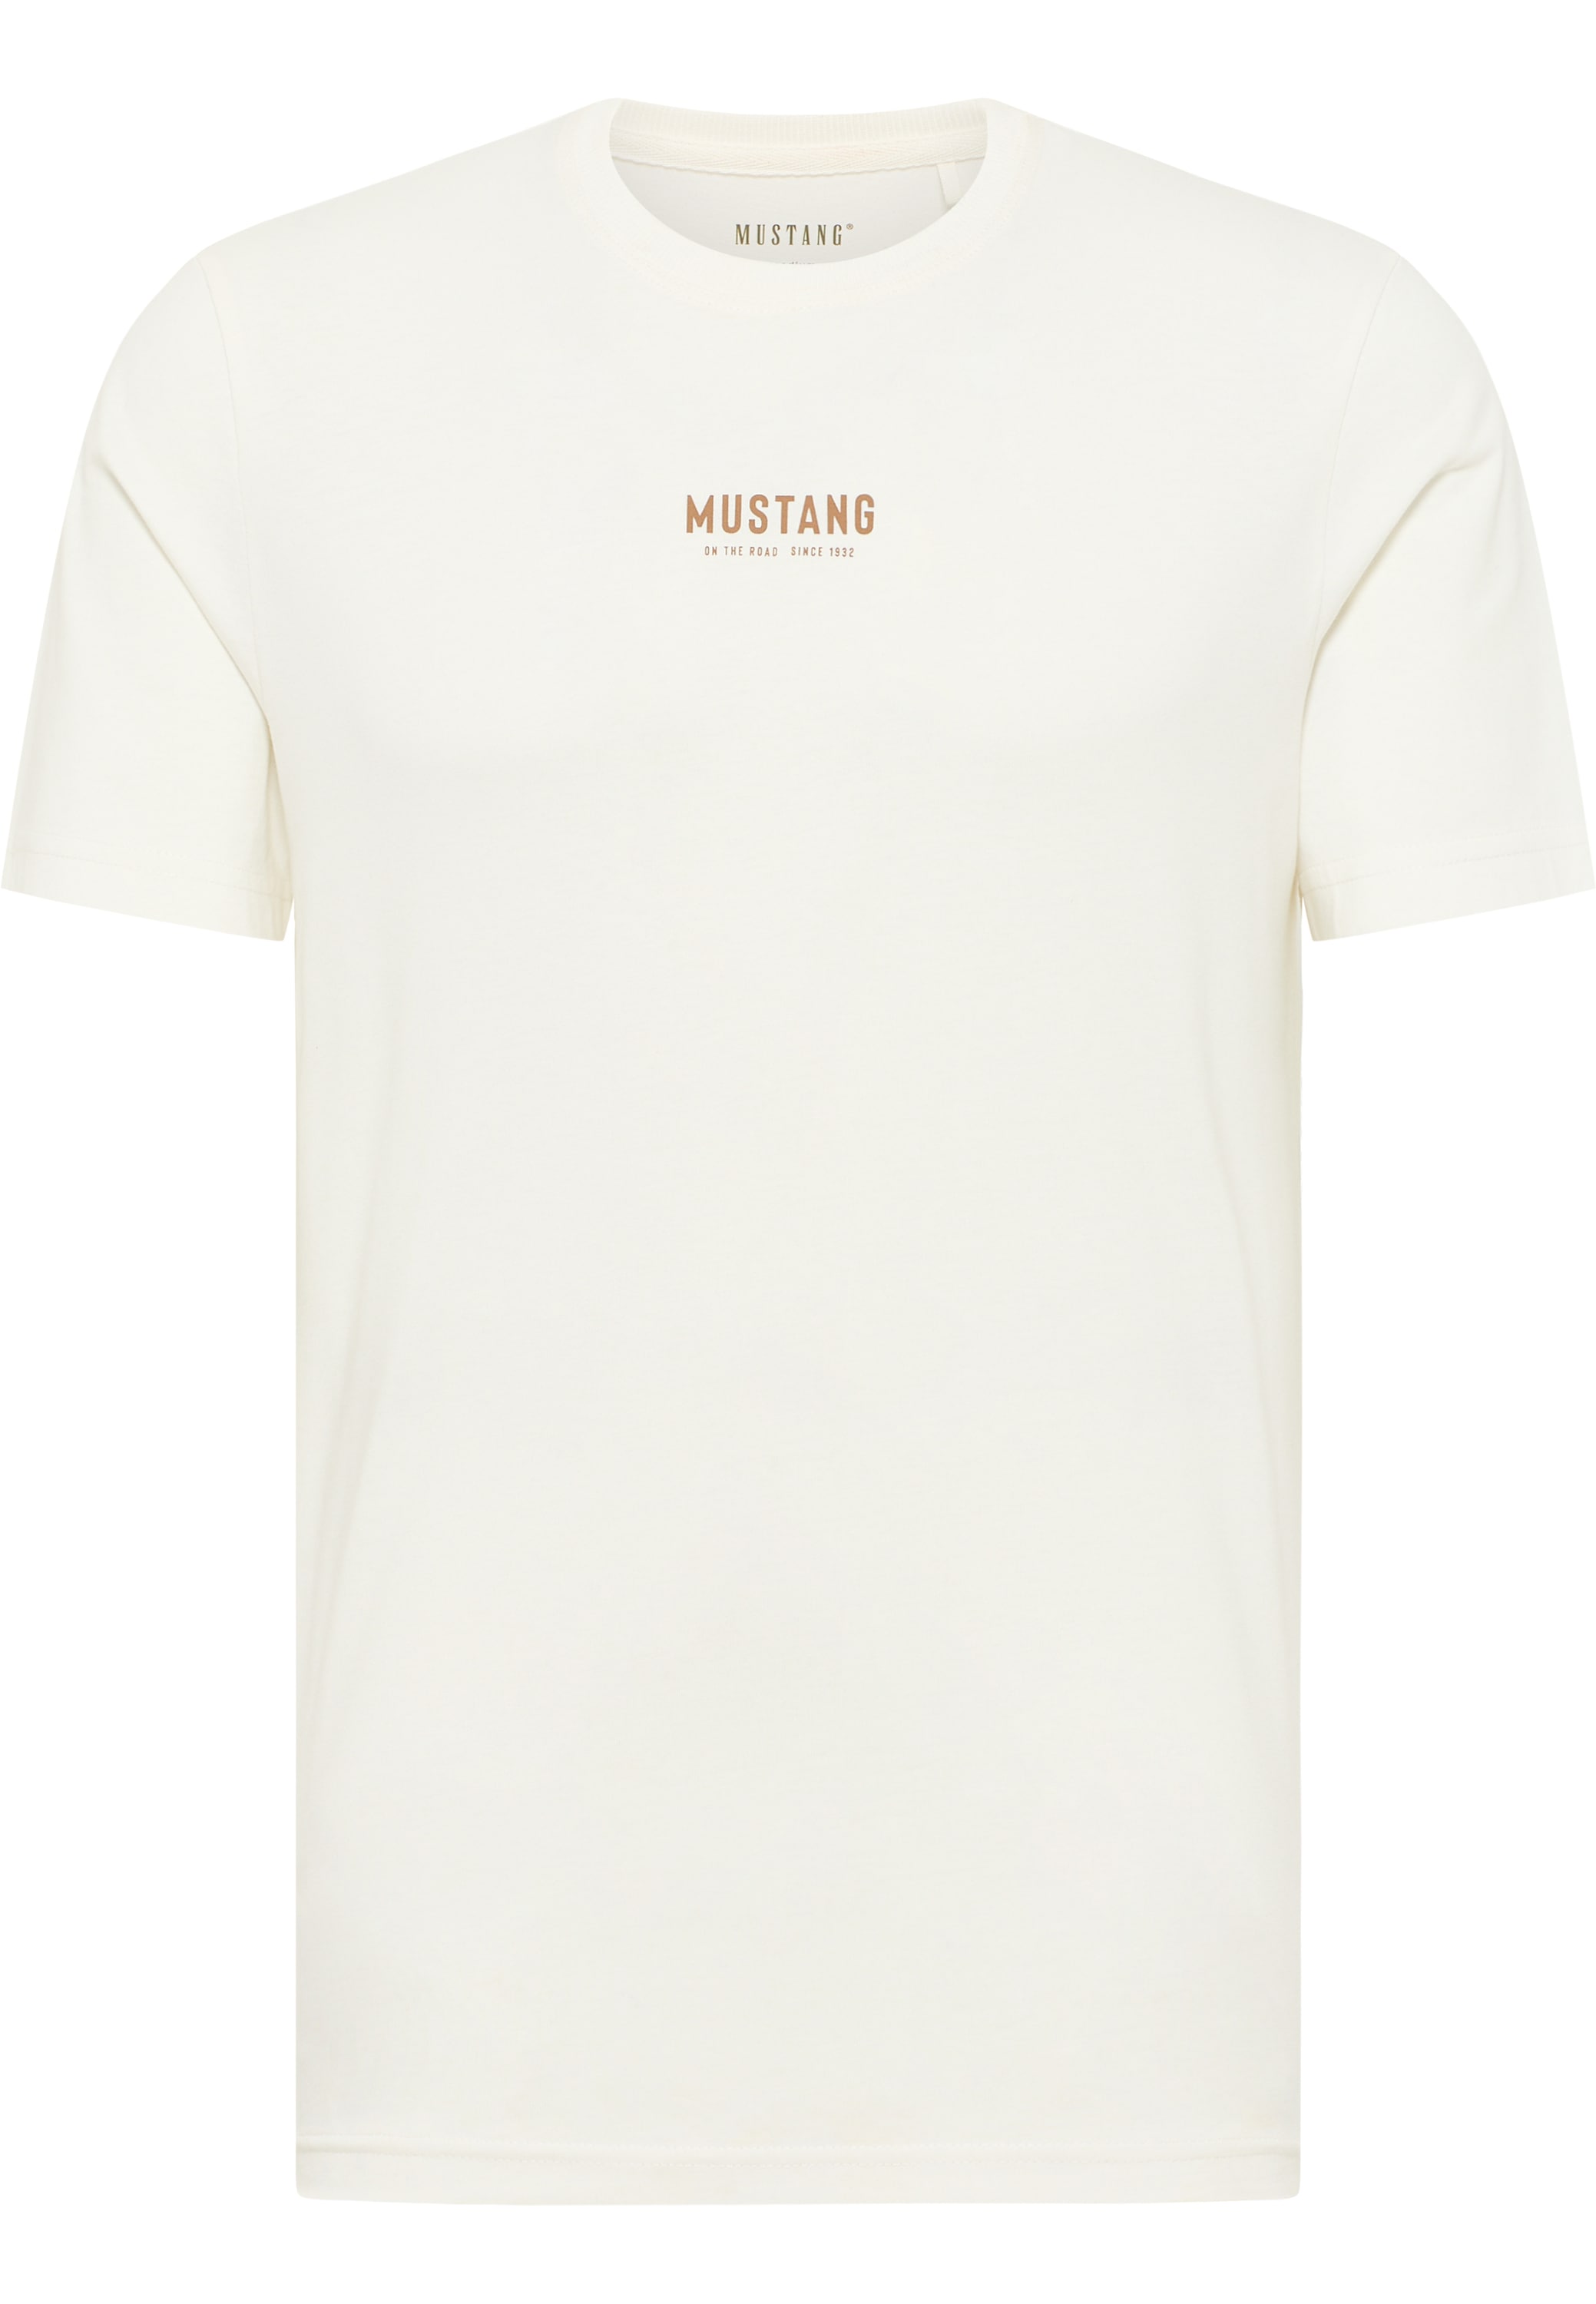 MUSTANG T-Shirt »Mustang T-Shirt BAUR ▷ | T-Shirt«, für Mustang T-Shirt